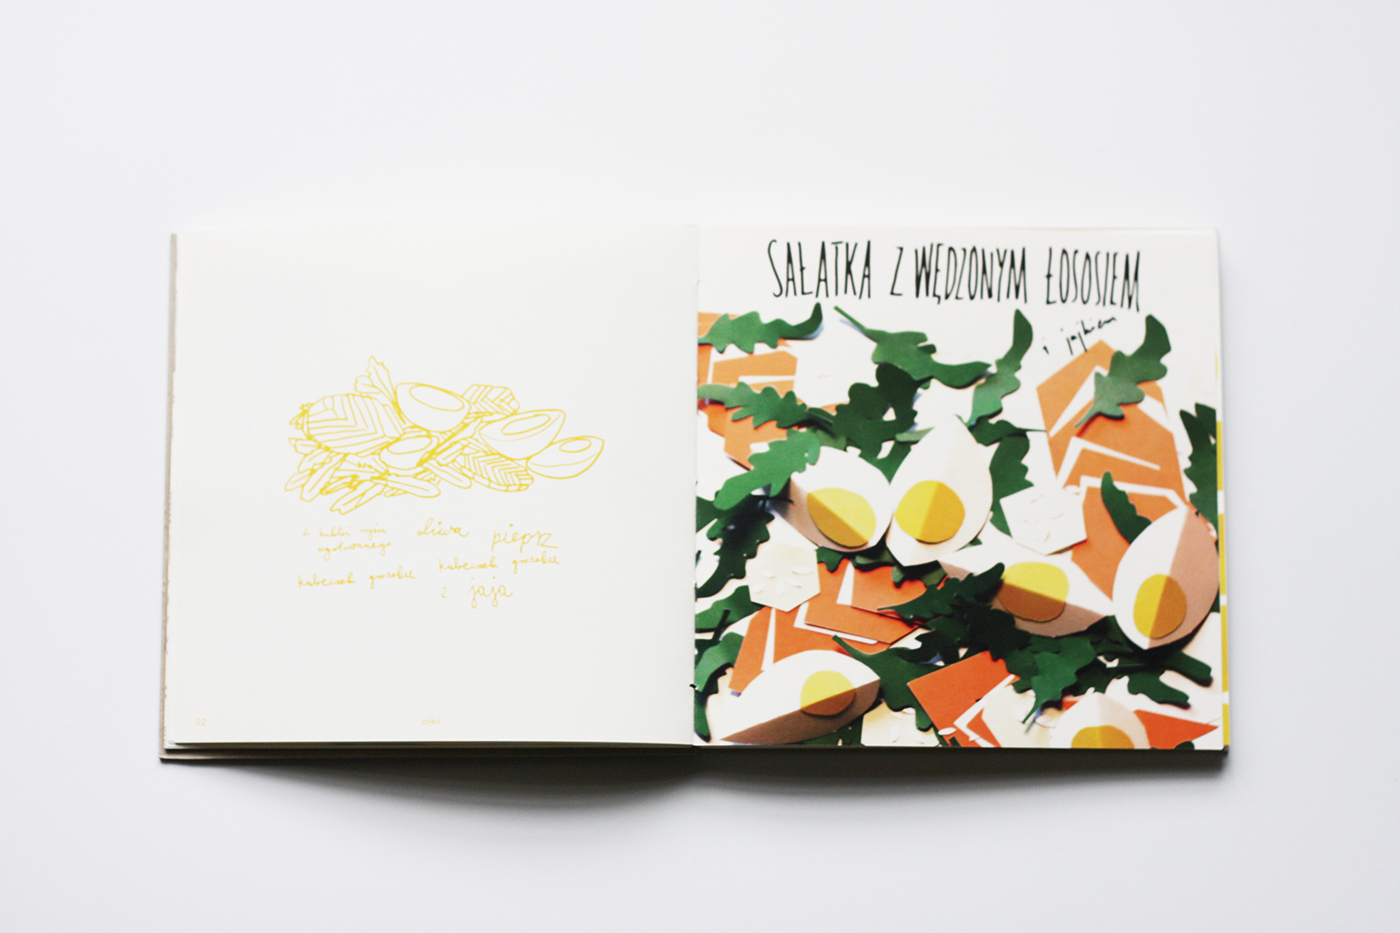 egg cookbook papercut book handmade Food  recipes kitchen